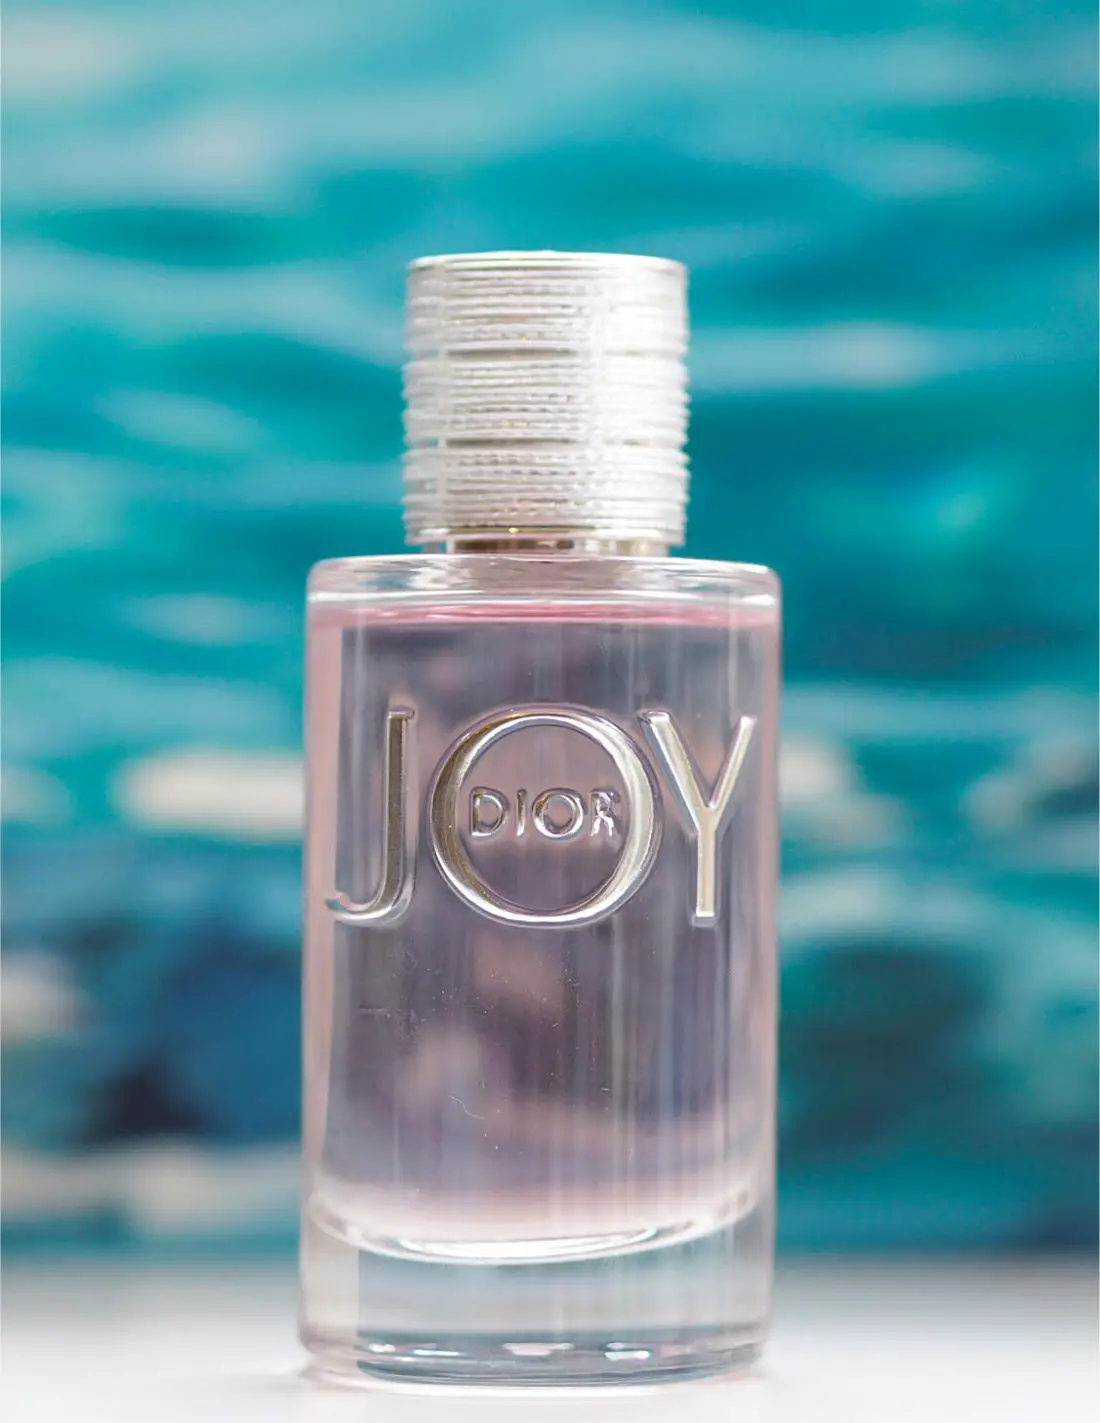 Dior Joy Fragrance  British Beauty Blogger